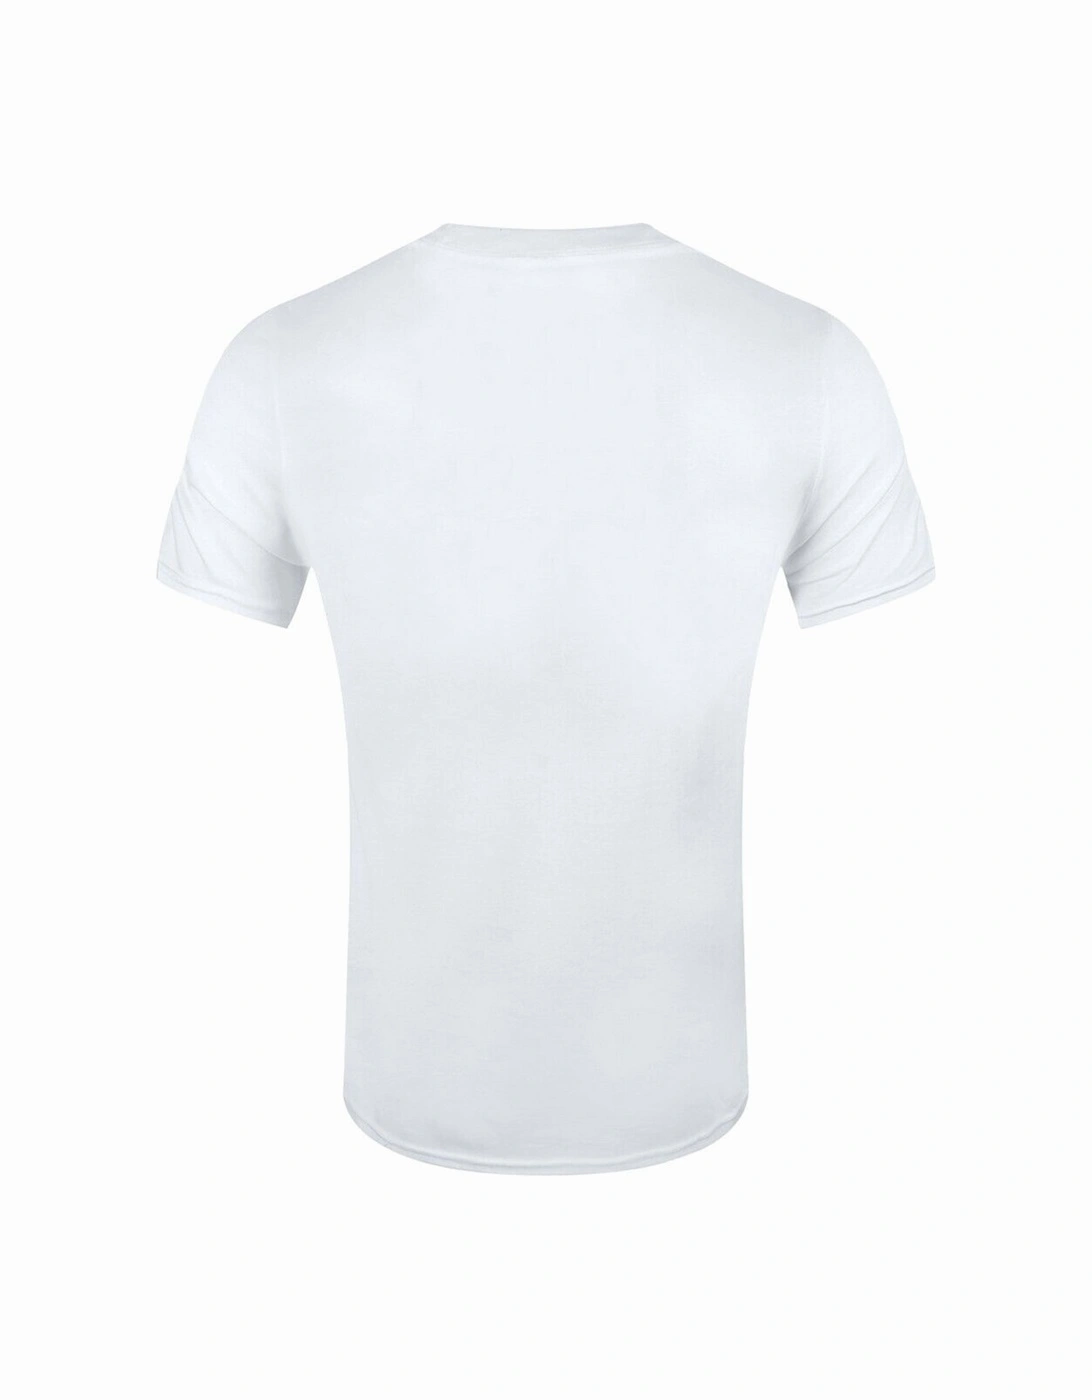 Unisex Adult Unknown Pleasures Gradient T-Shirt